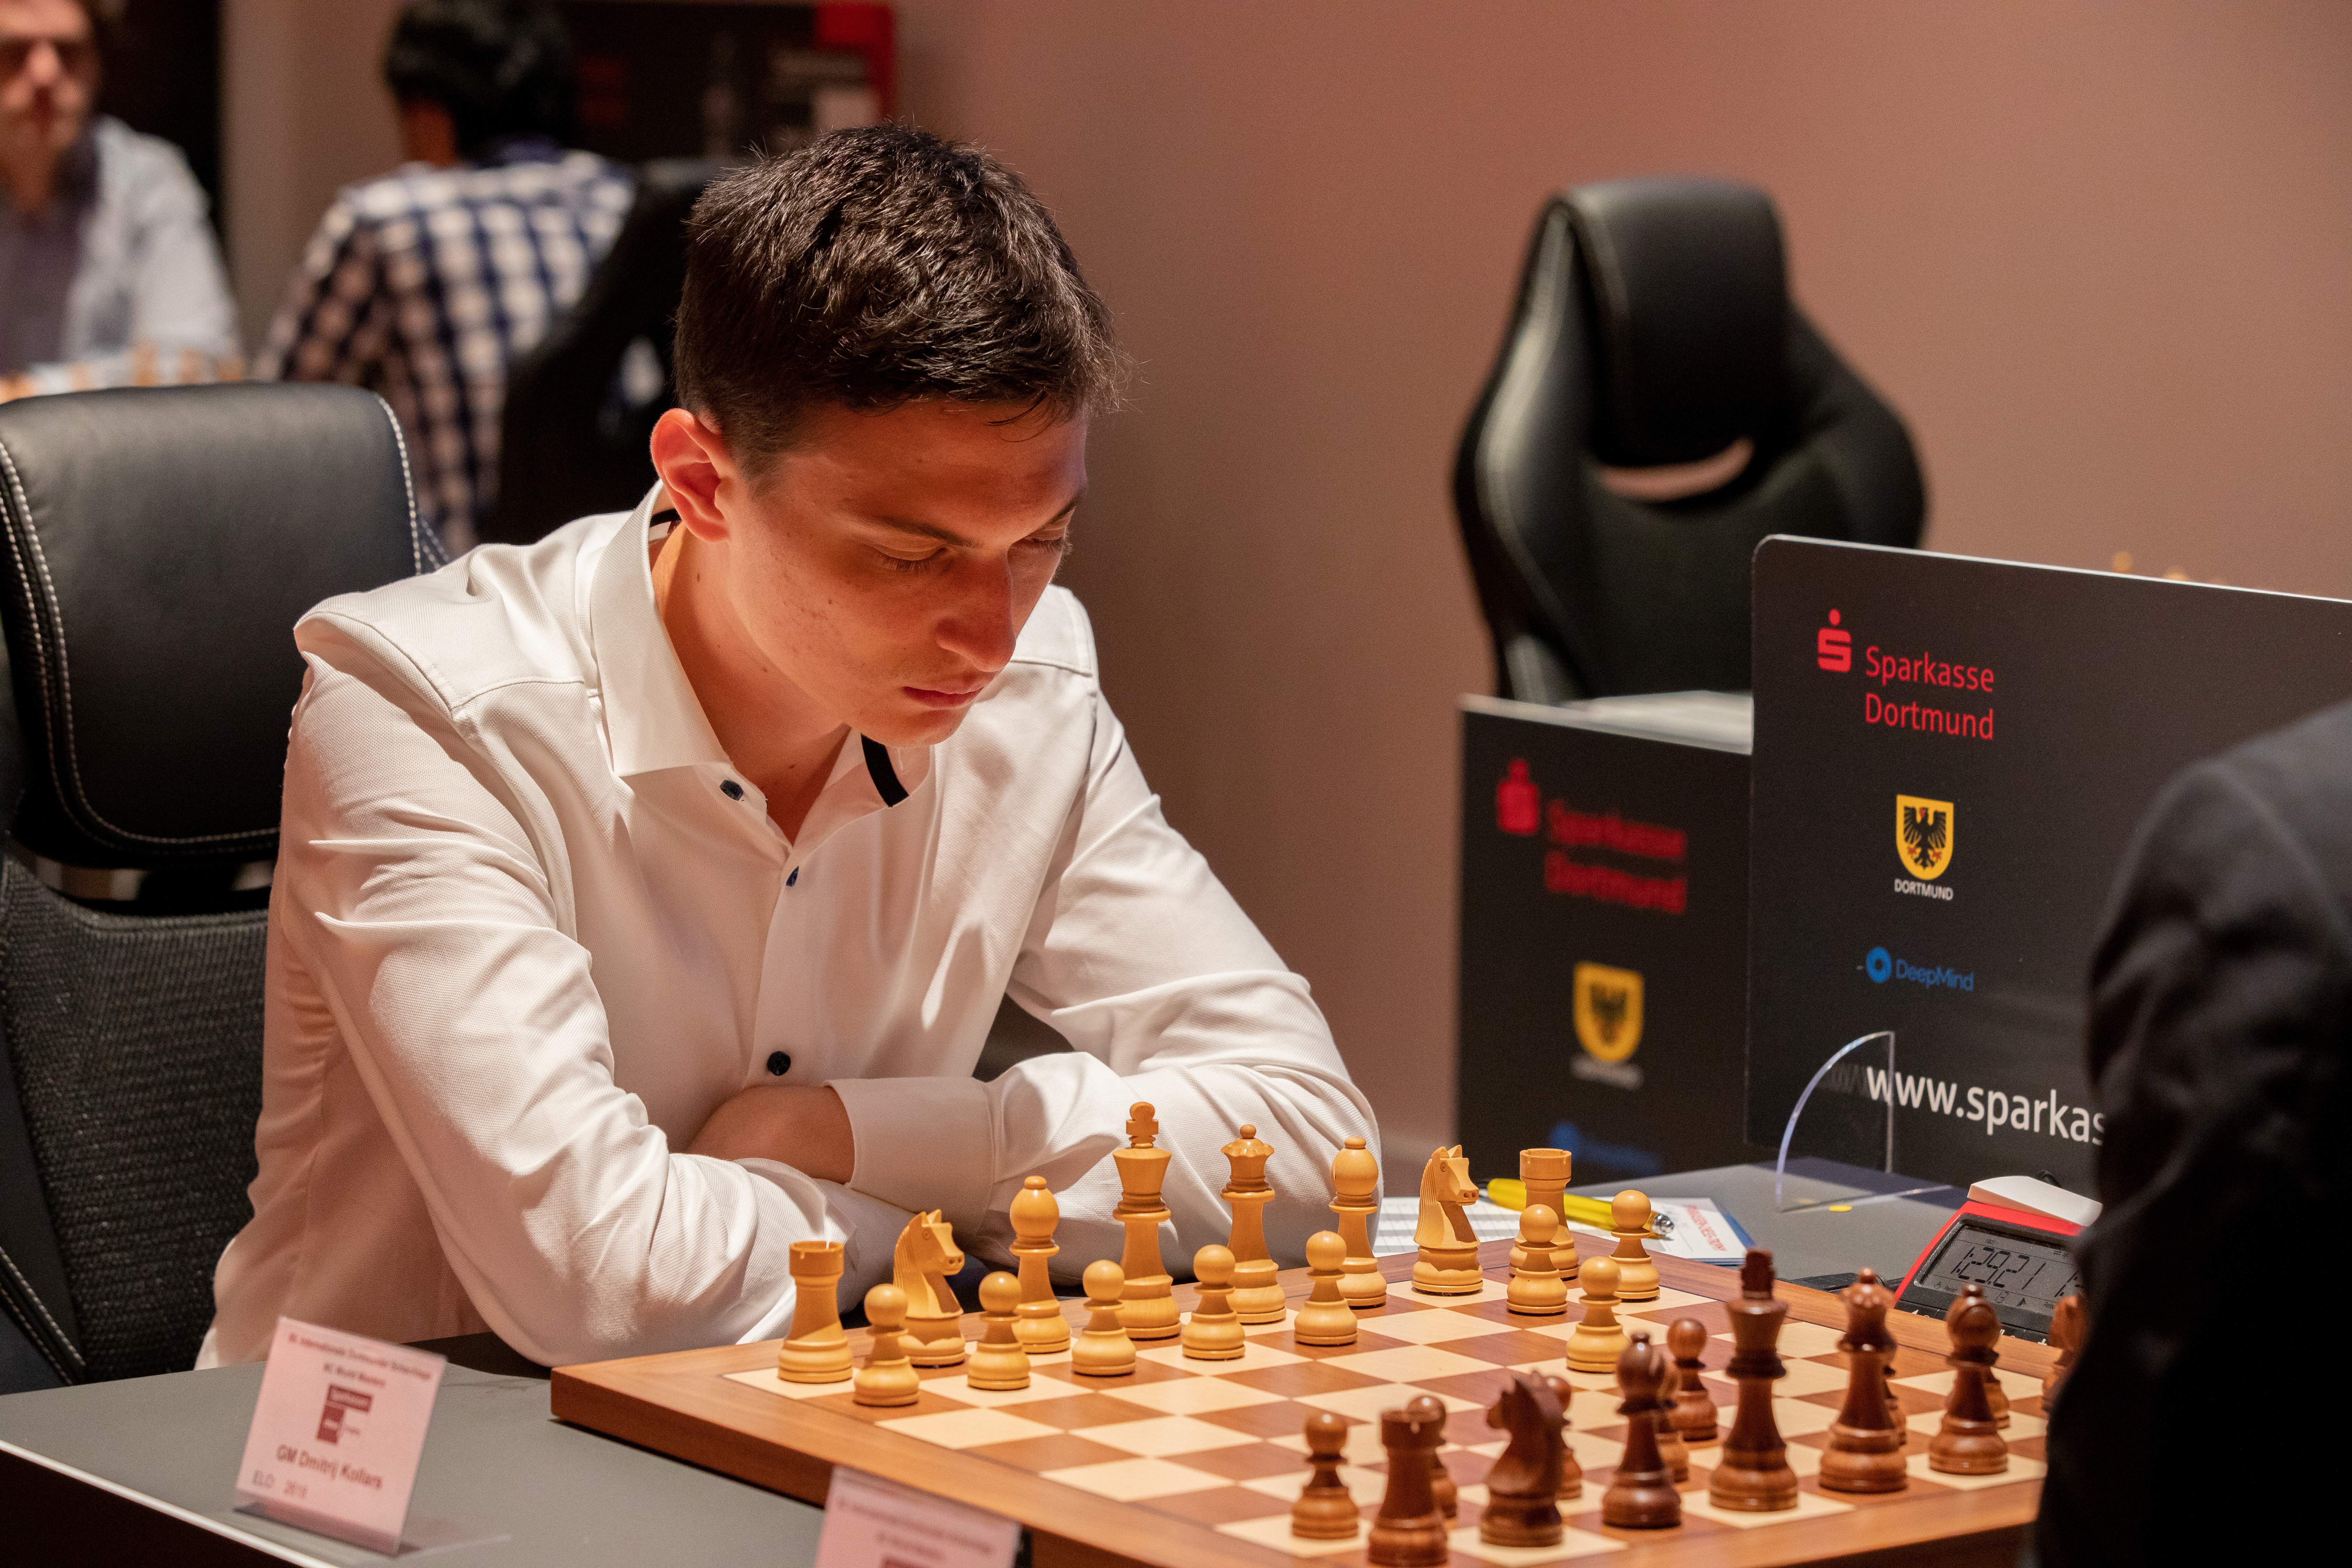 Kollars beats Kramnik